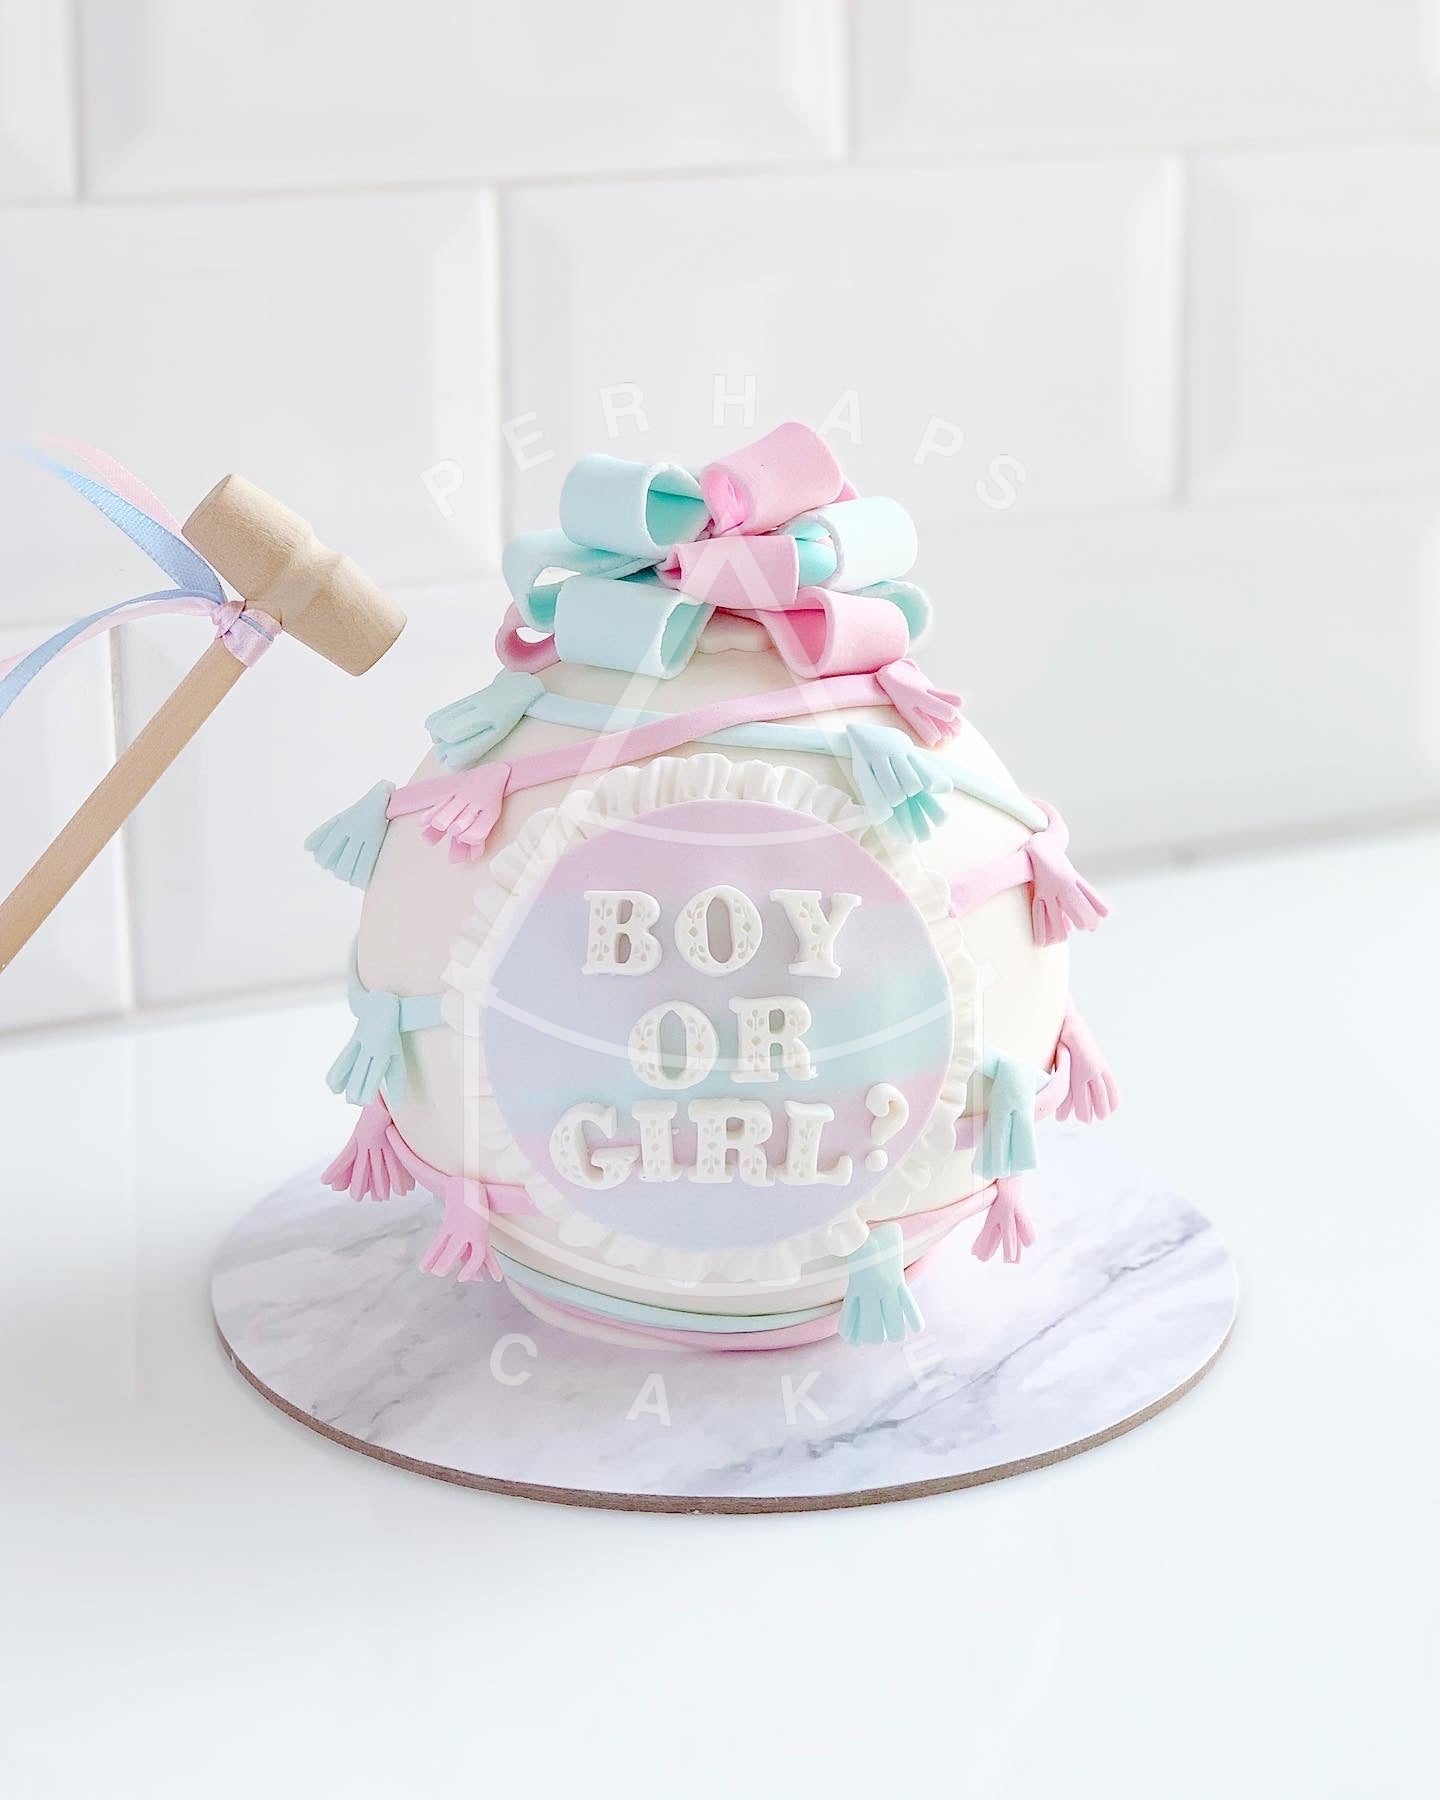 BOY or GIRL ?  Perhaps A Cake